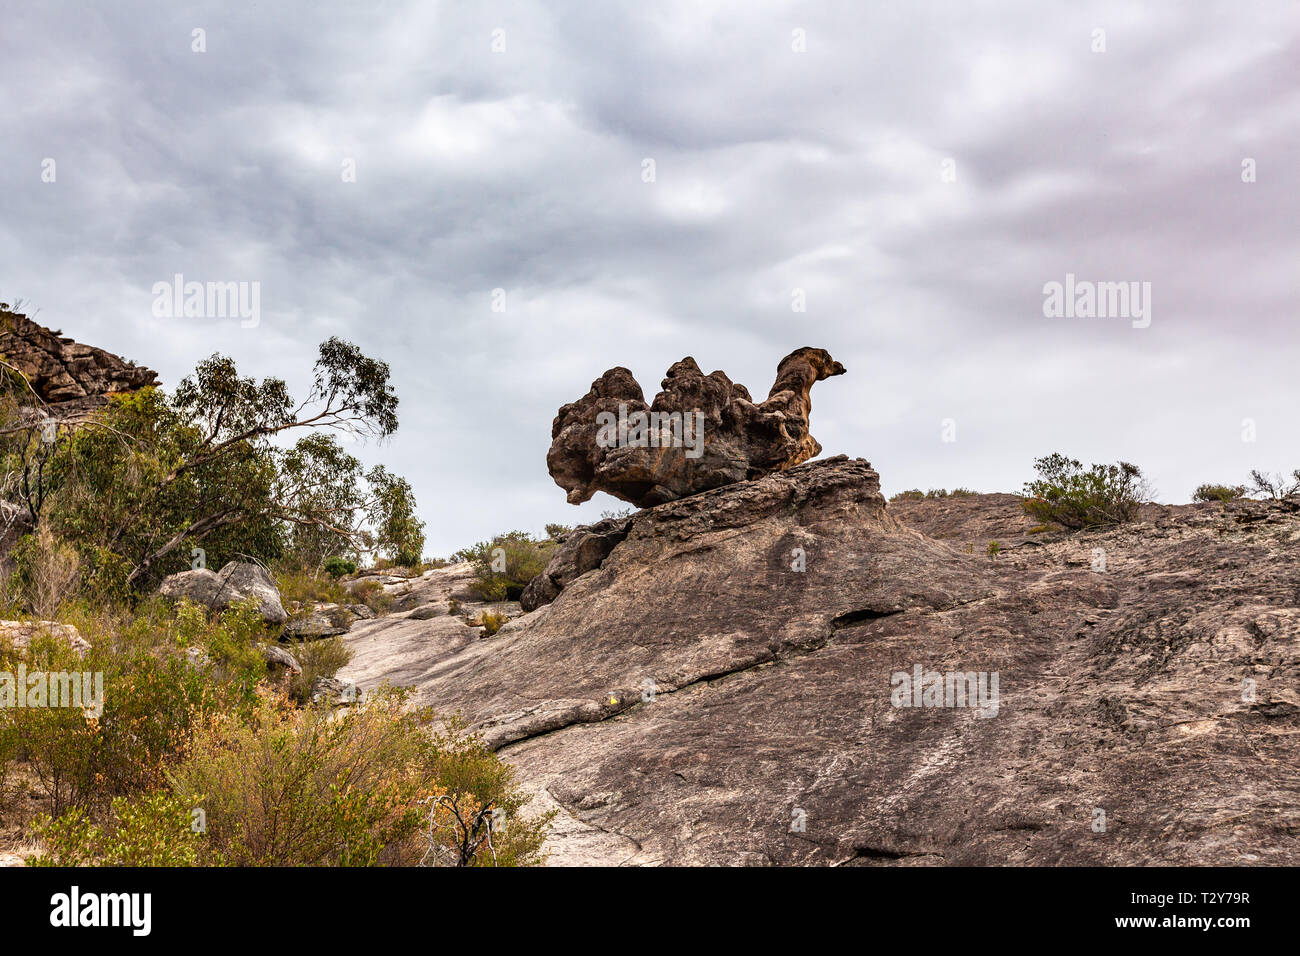 Huge boulder in shape of a camel in Grampians National Park, Victoria, Australia Stock Photo